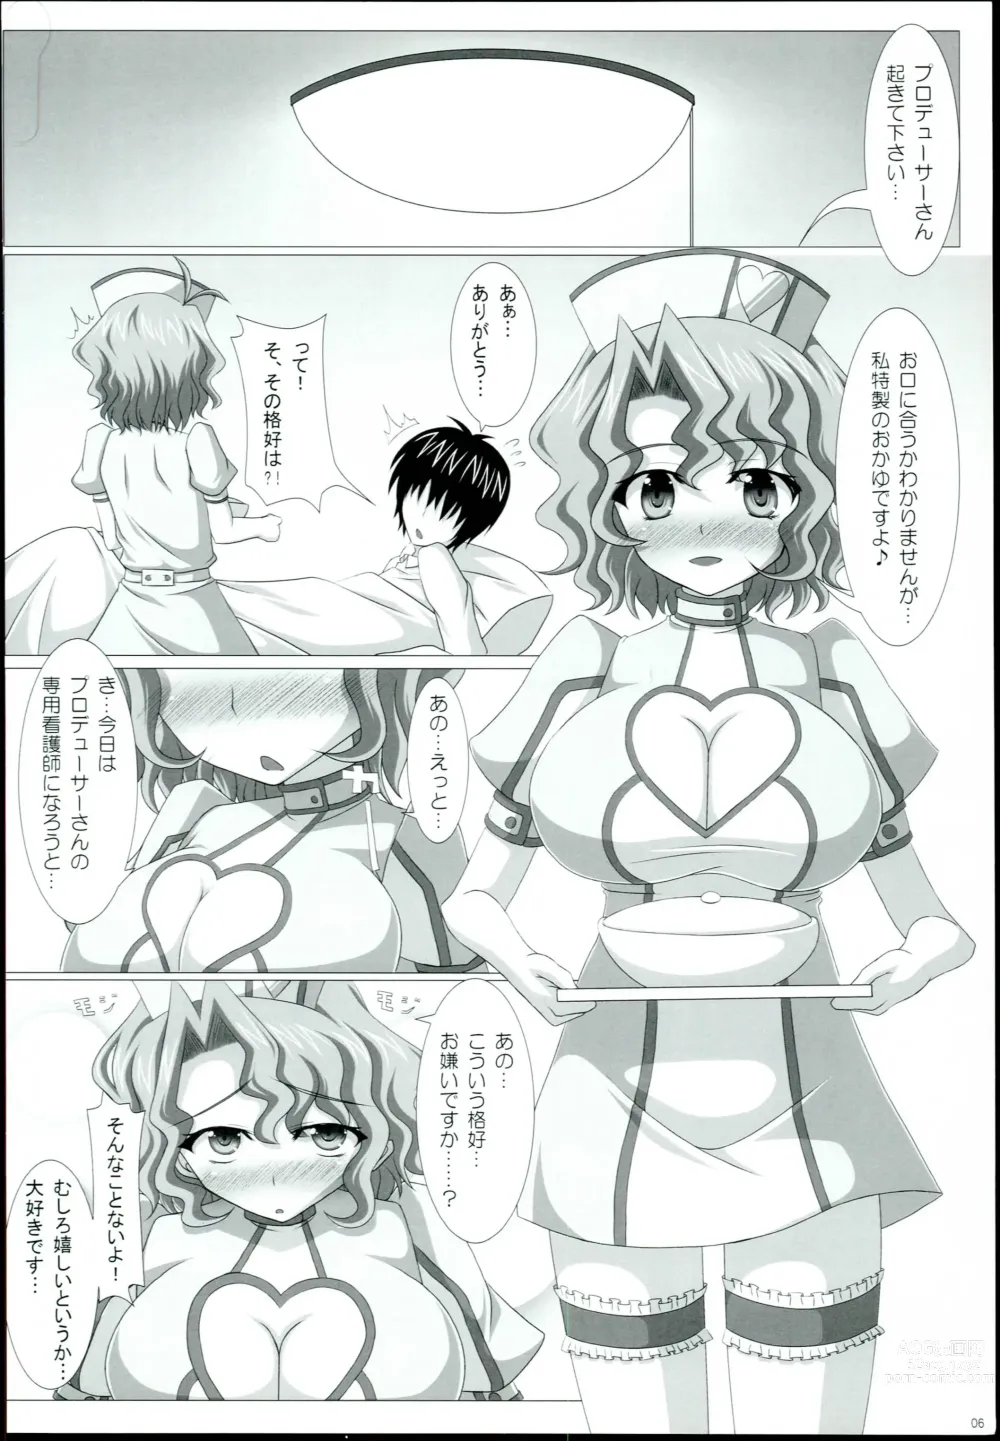 Page 6 of doujinshi Kango no Jikan